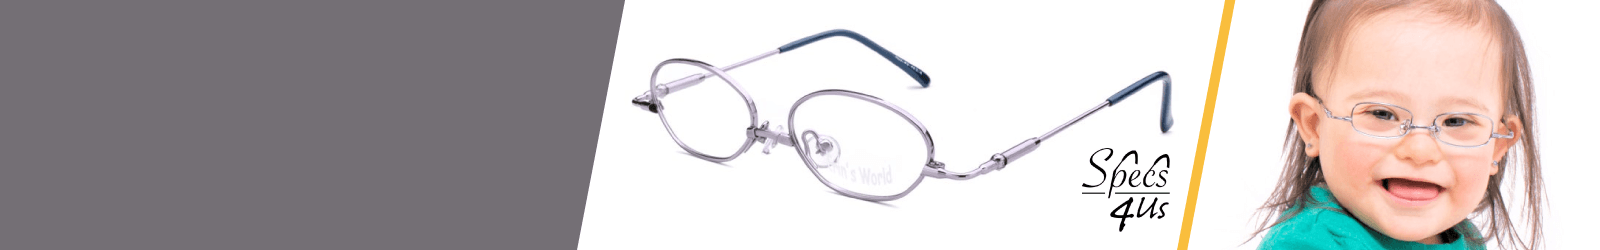 White Specs4us Eyewear for Kids   for Neutrals